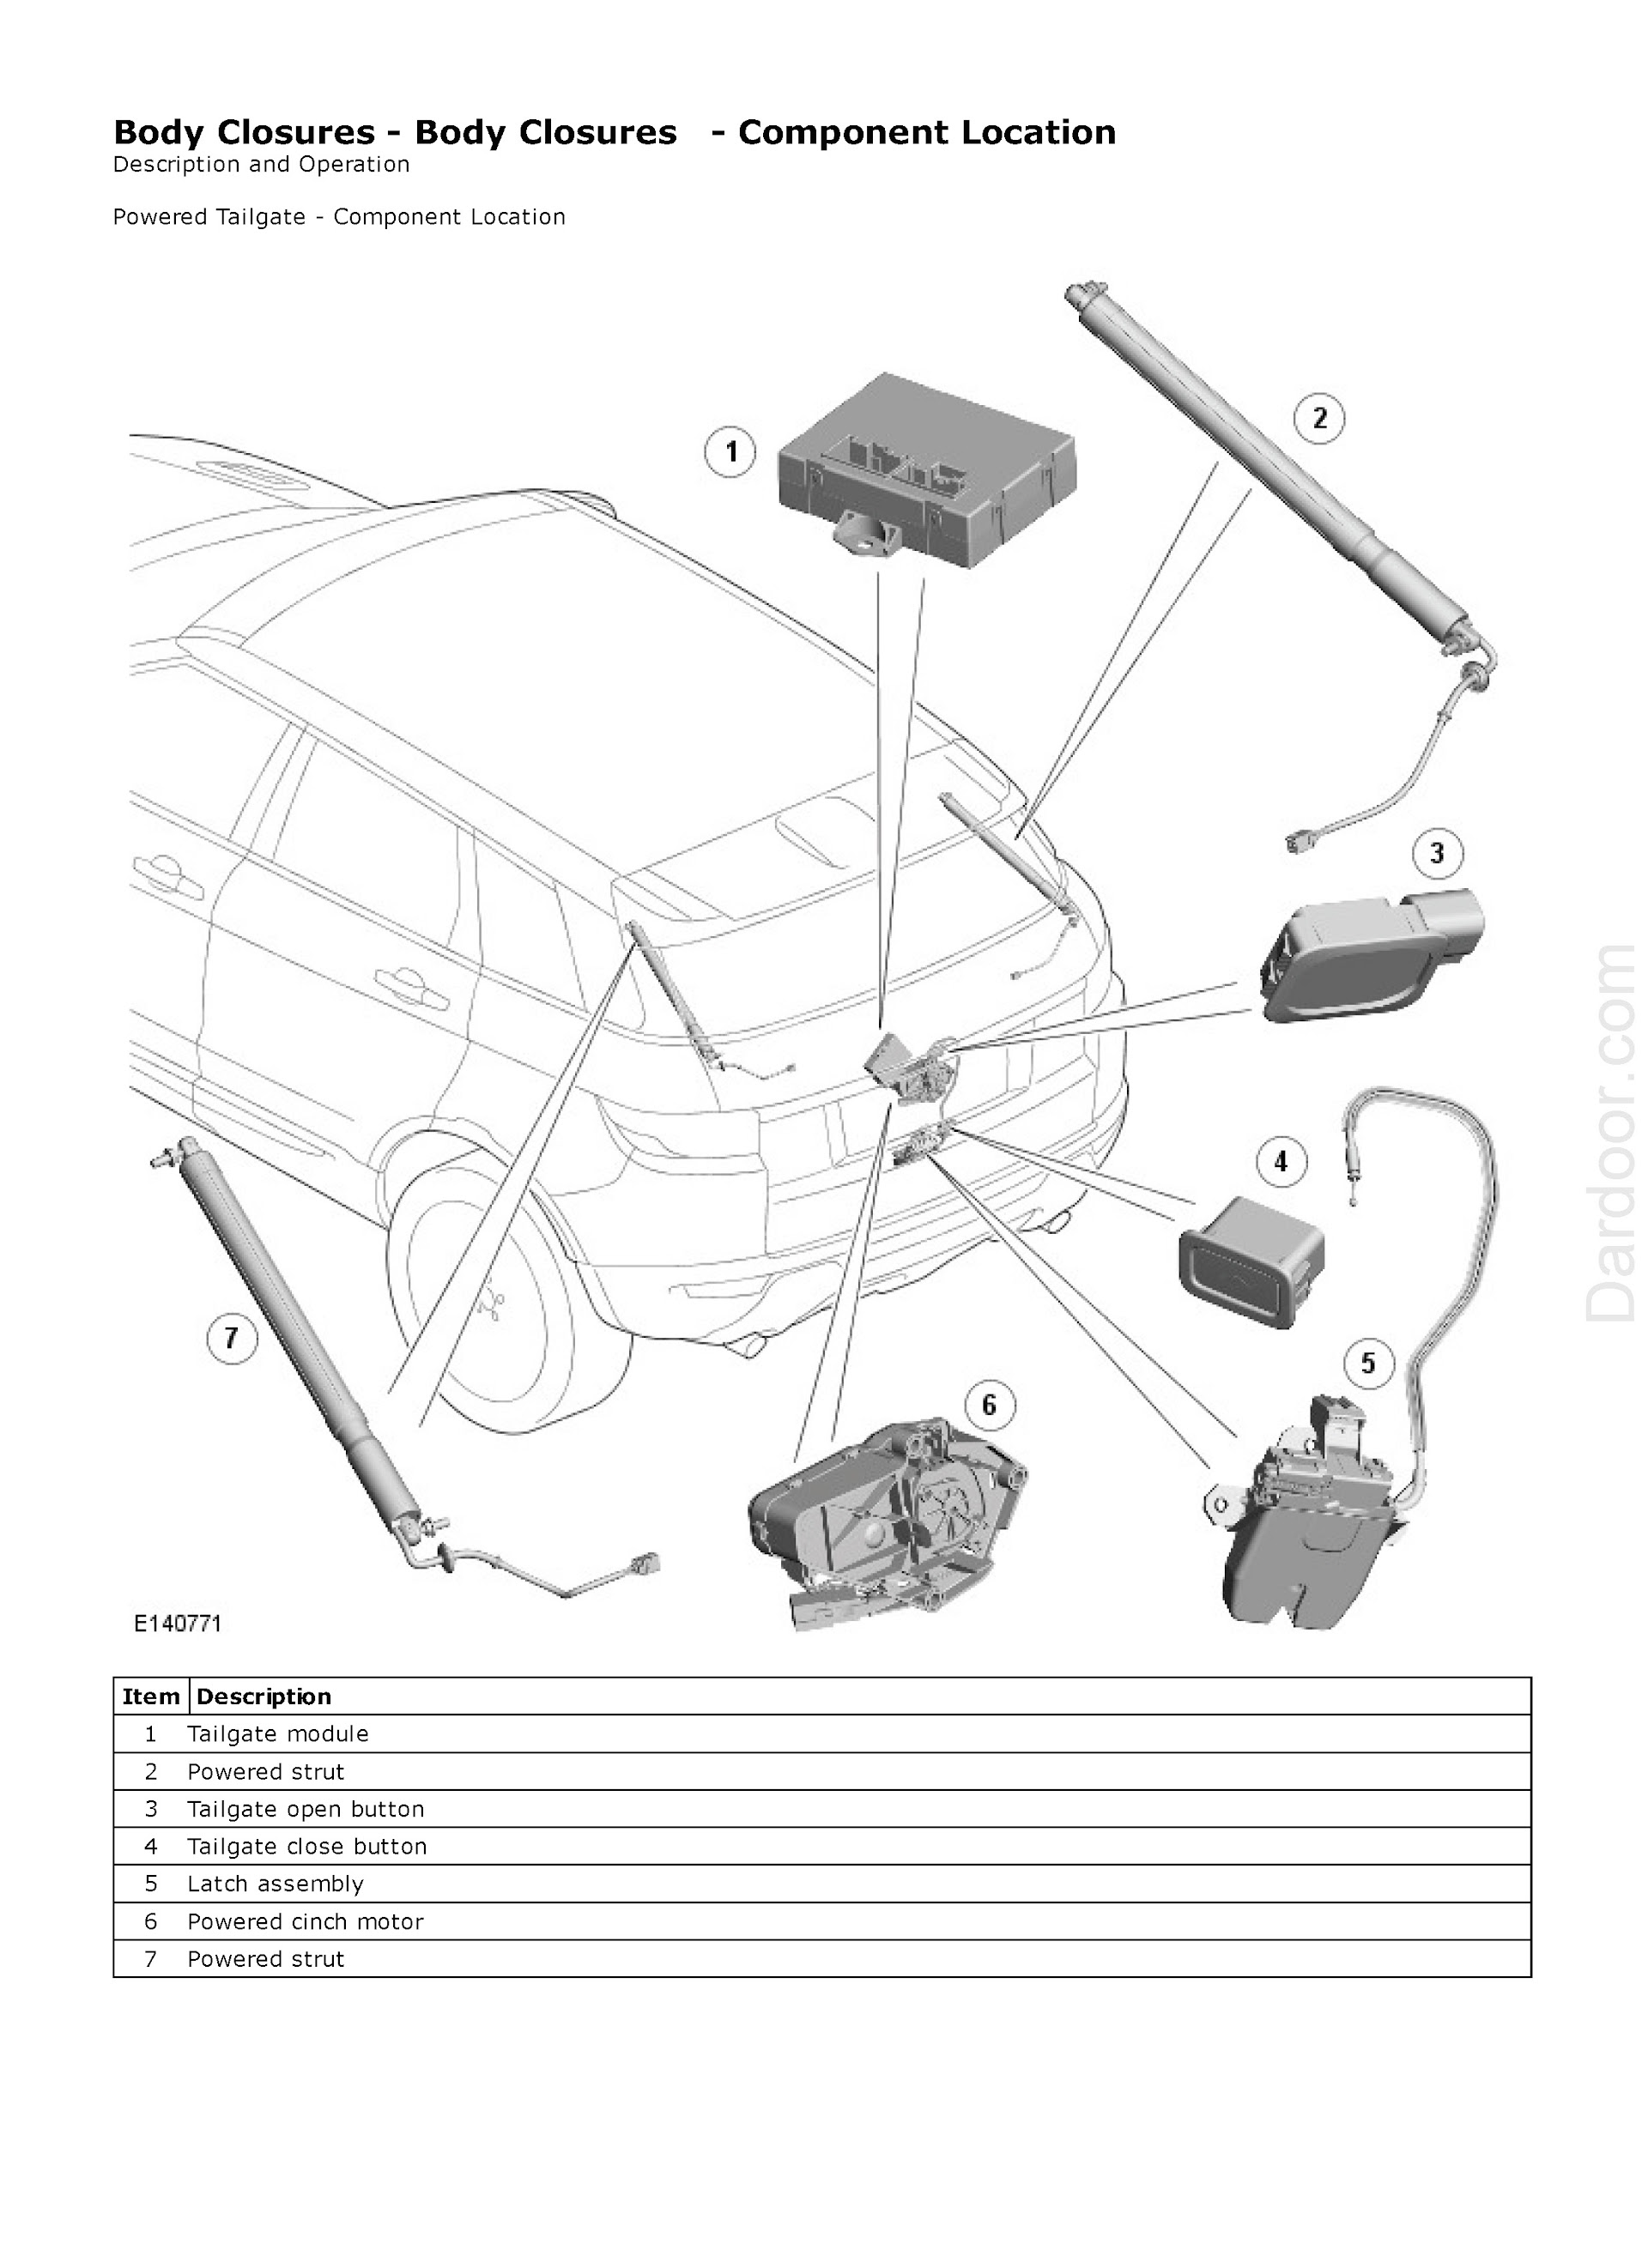 Download 2013 Range Rover Evoque Service Repair Manual.